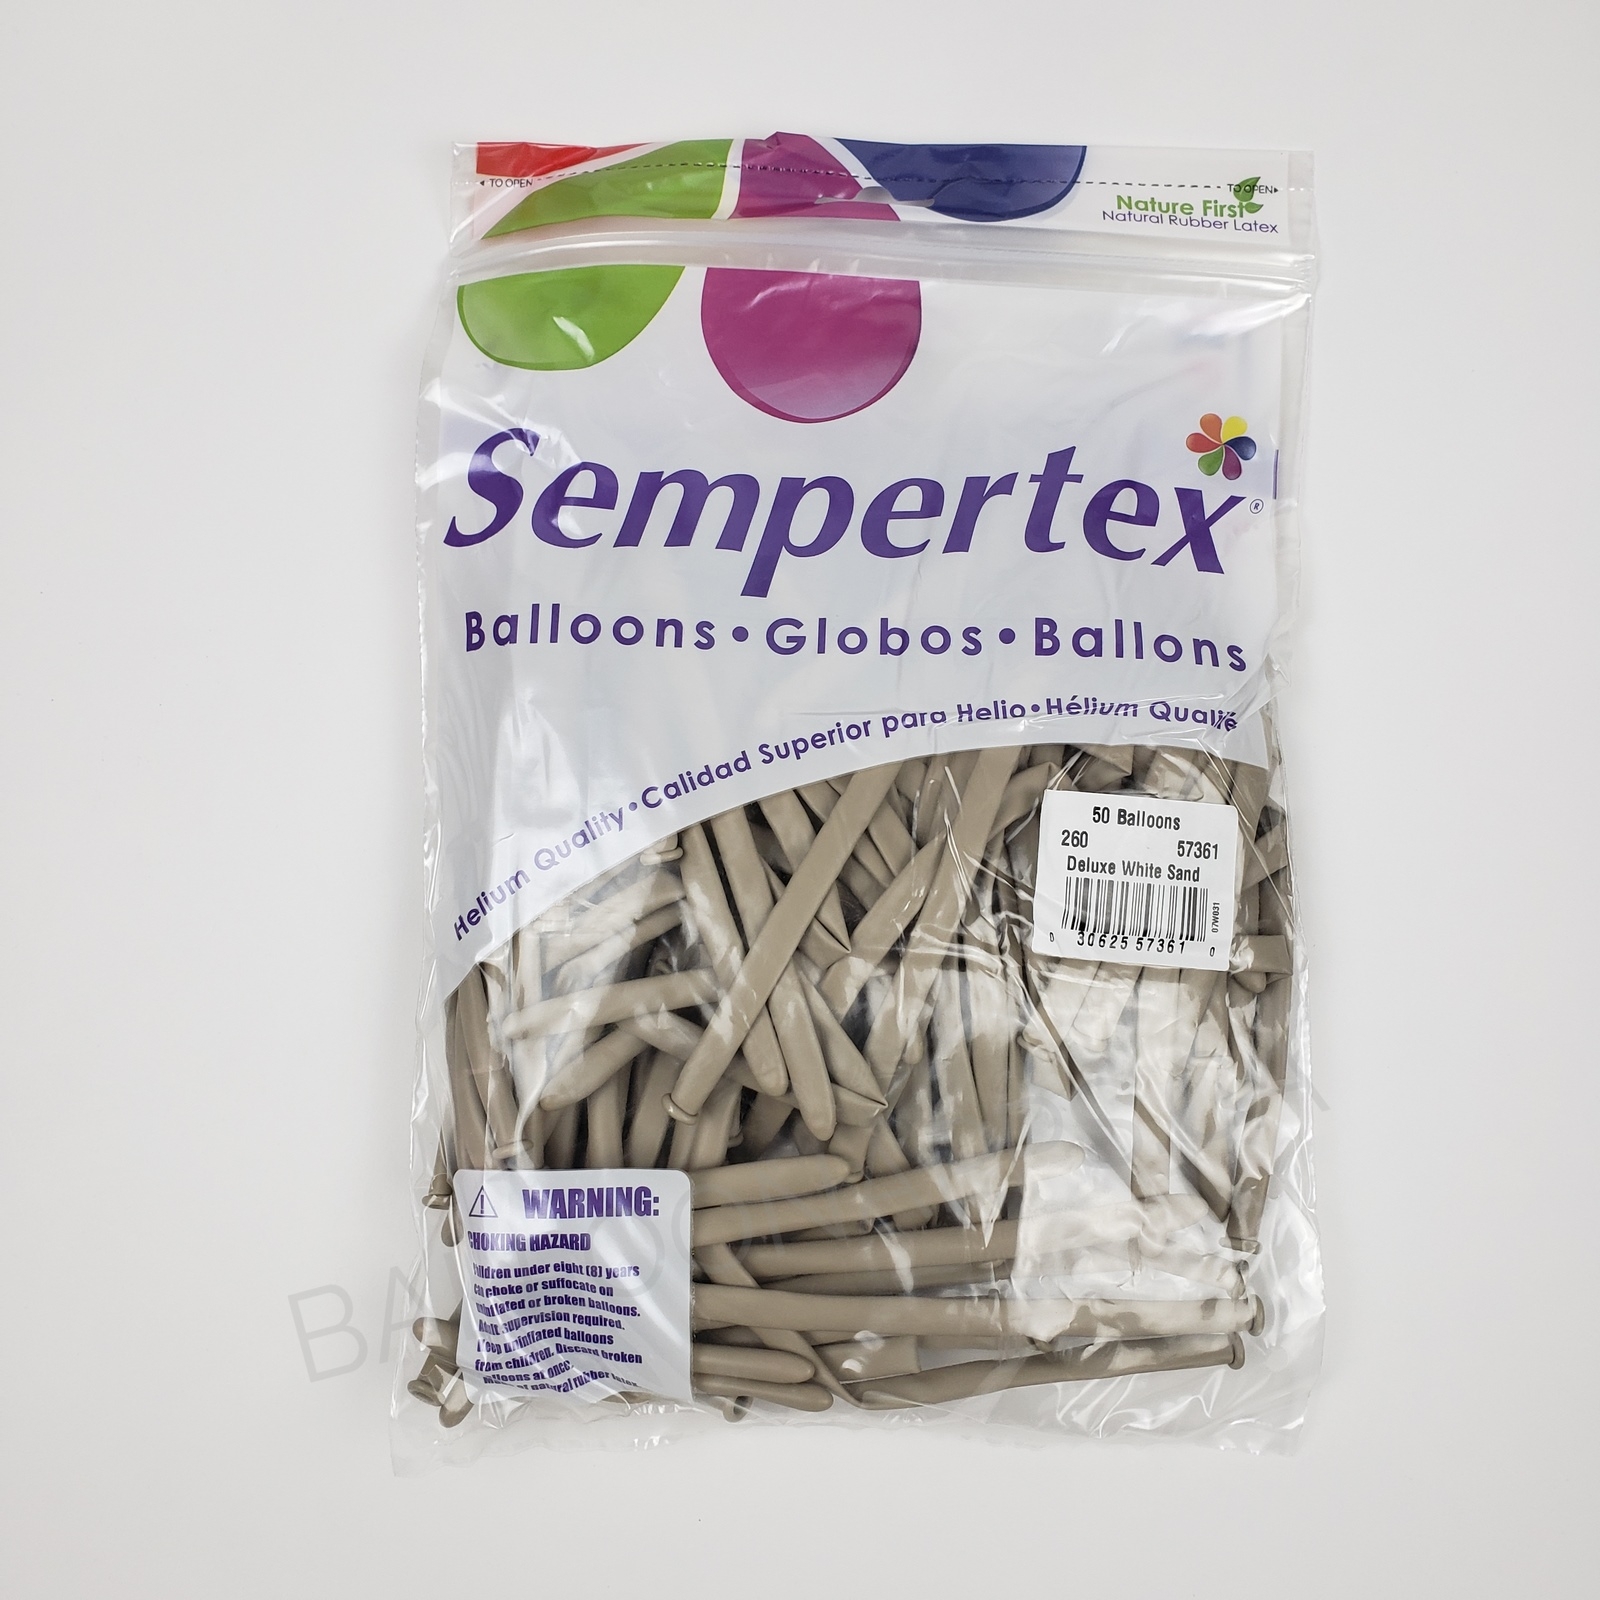 Sempertex 260 Deluxe White Sand 